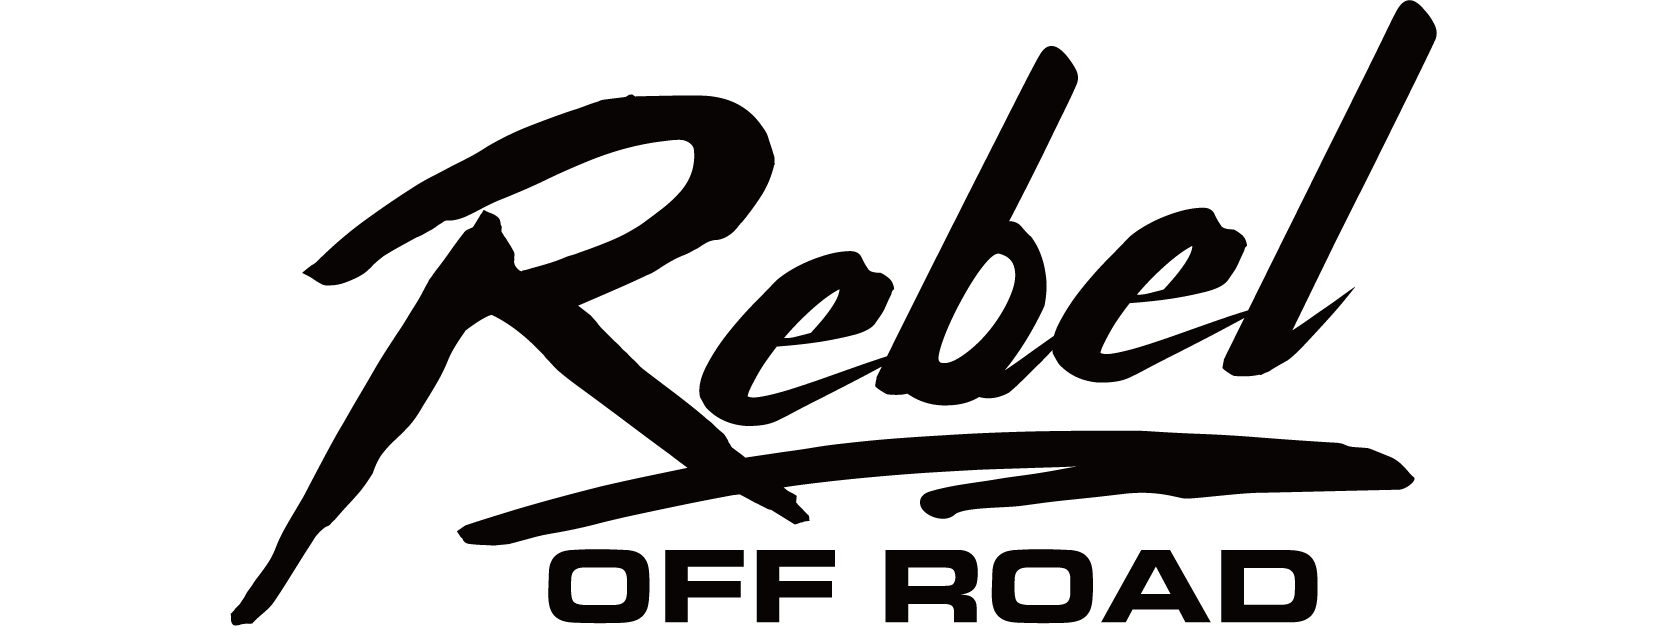 https://www.rc4wd.com/ProductImages/Logos/Rebel.png